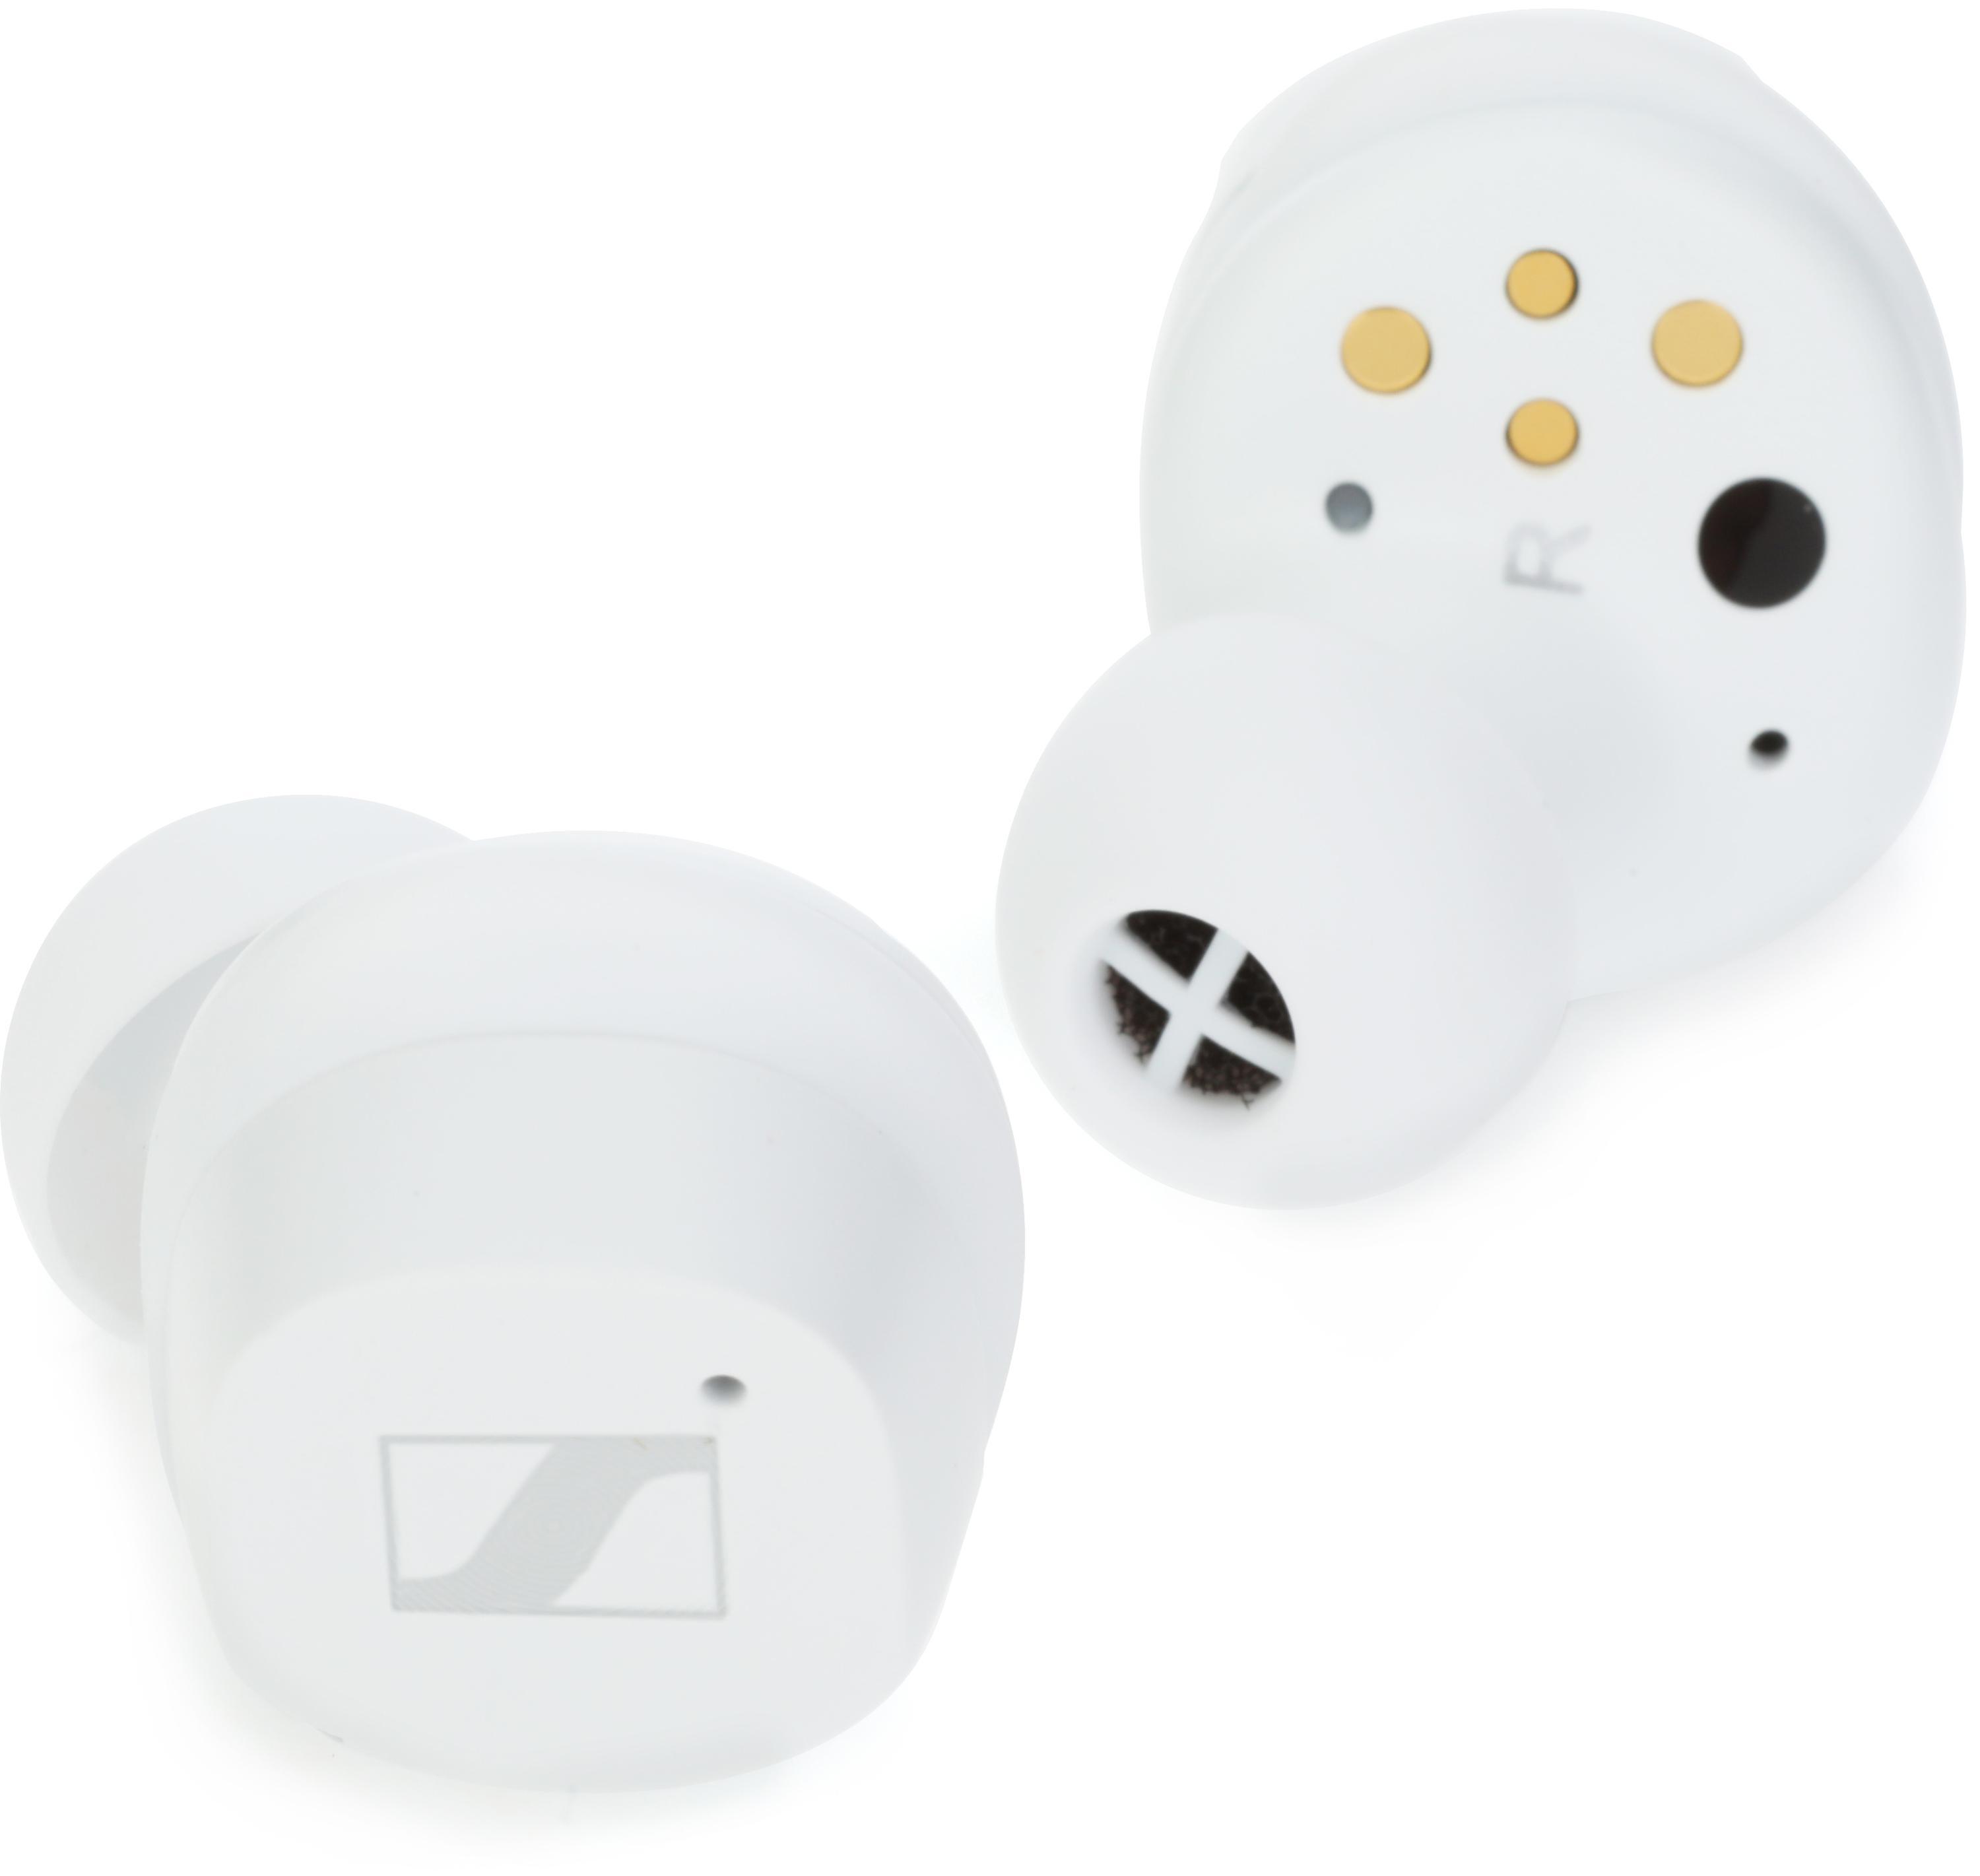 Sennheiser Momentum True Wireless 3 Earbuds - White | Sweetwater